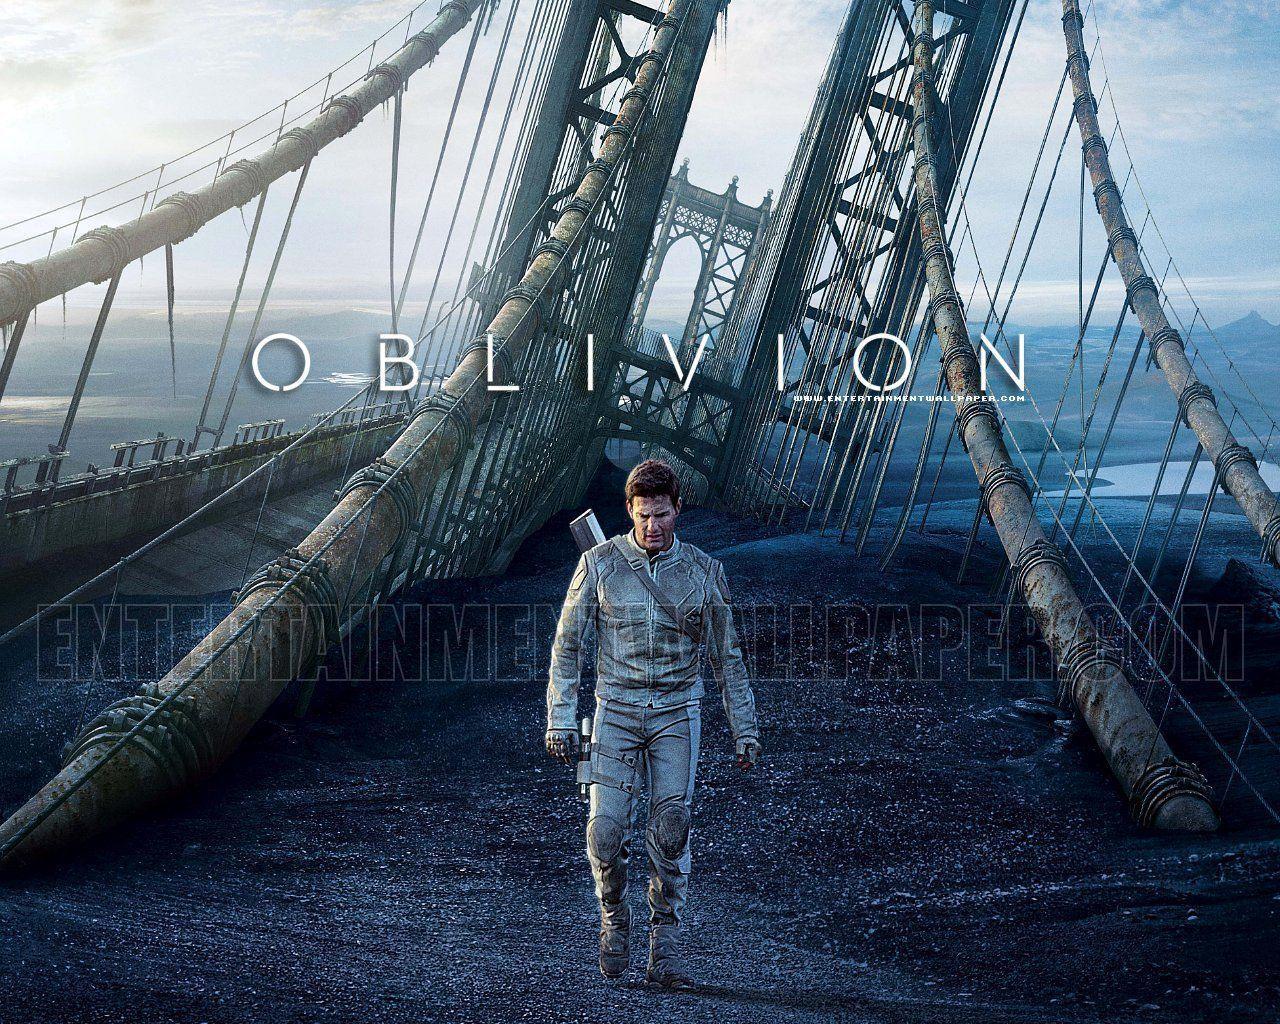 Oblivion Movie Wallpaper 9959 Image HD Wallpaper. Wallfoy